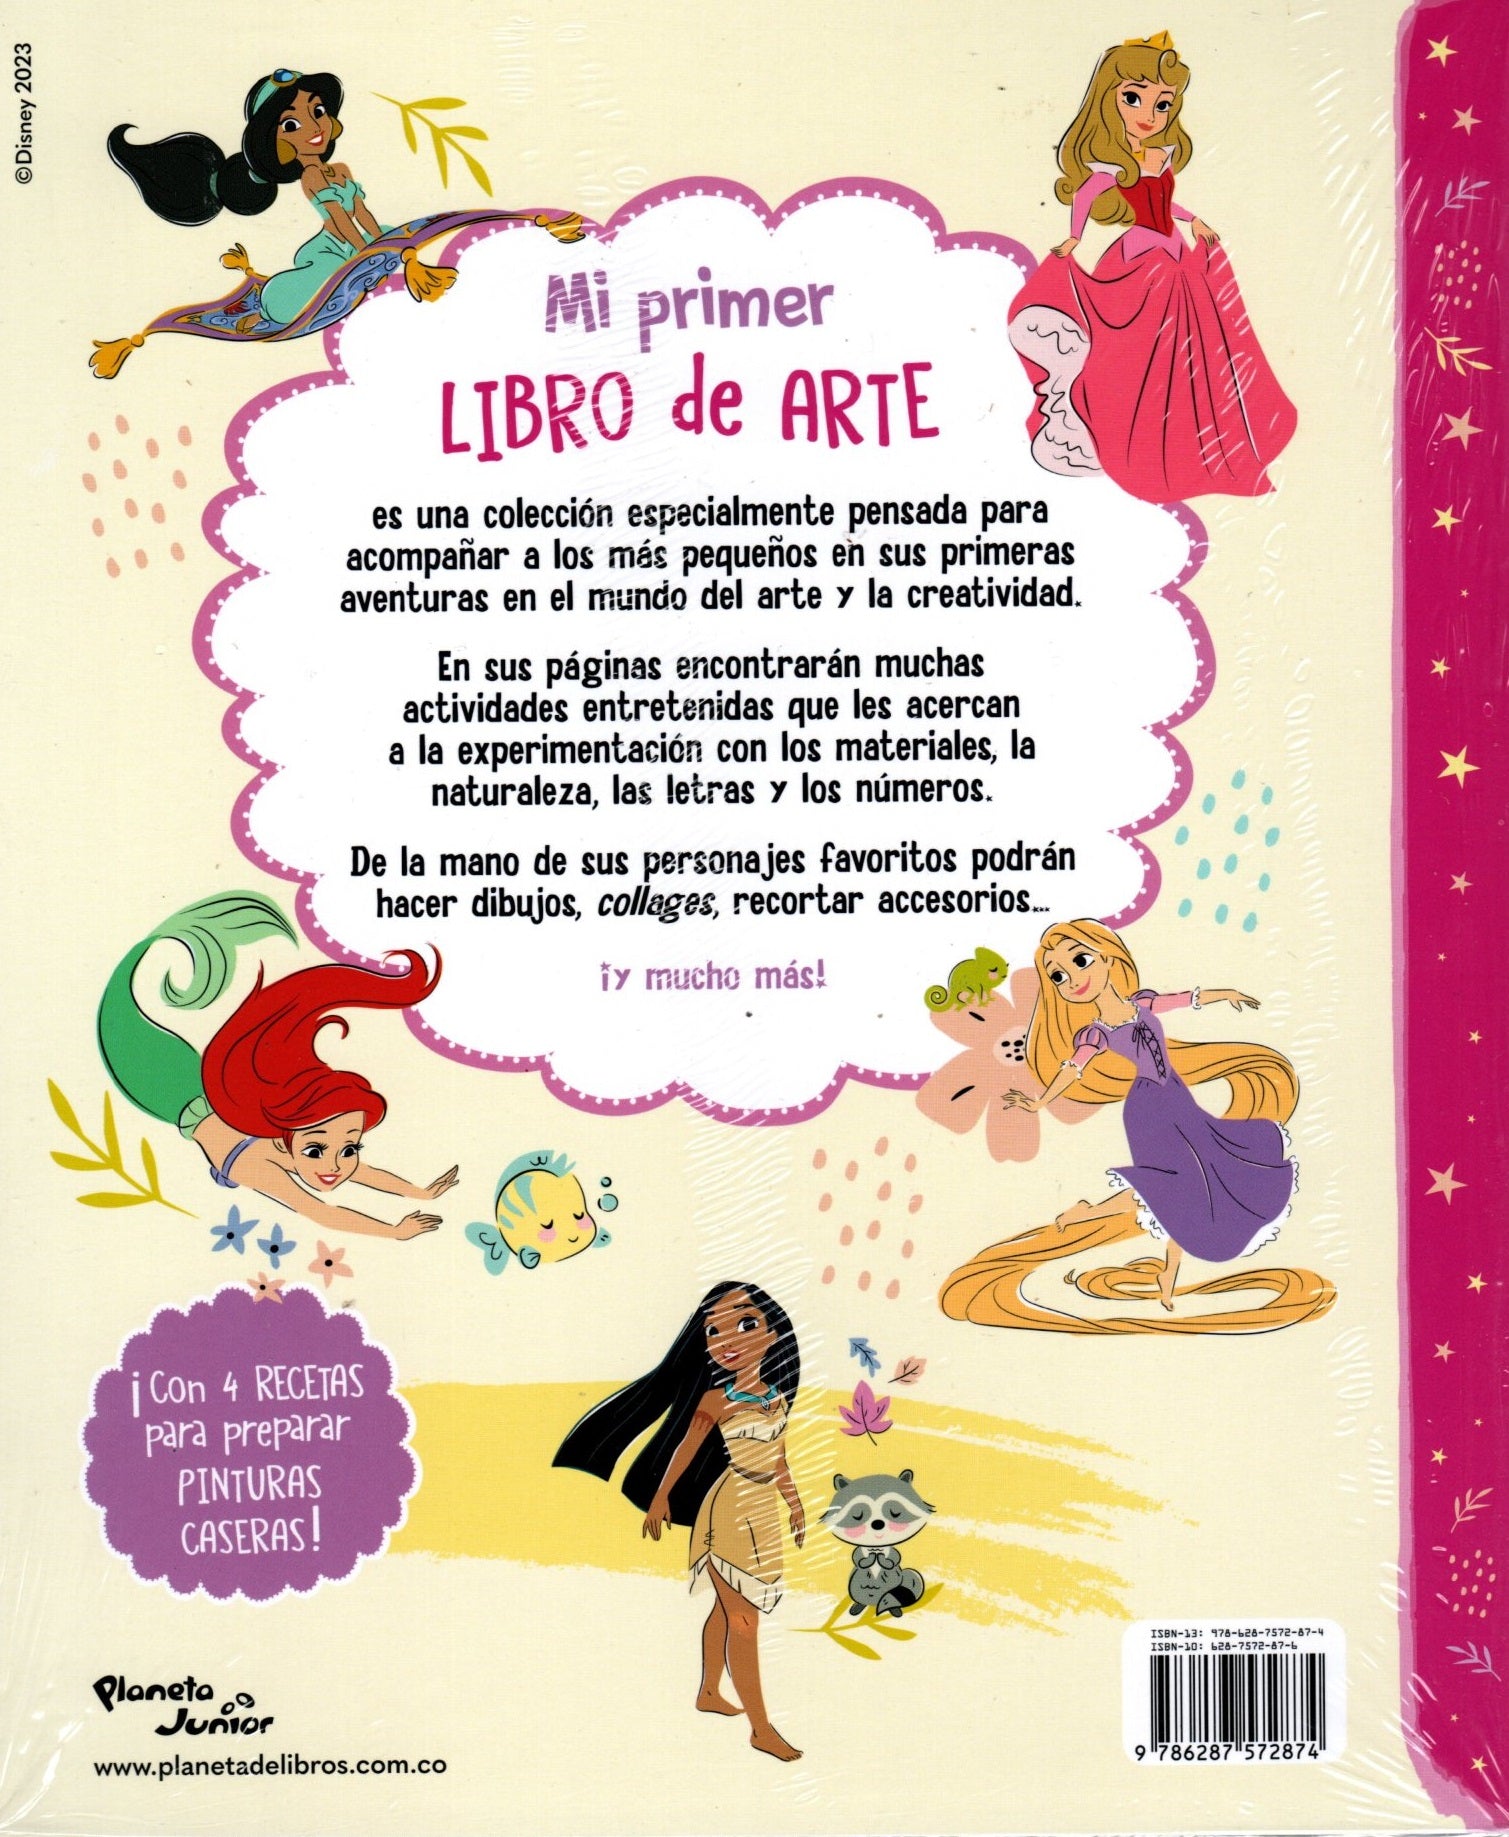 Libro Disney - Princesas: Mi primer libro de arte